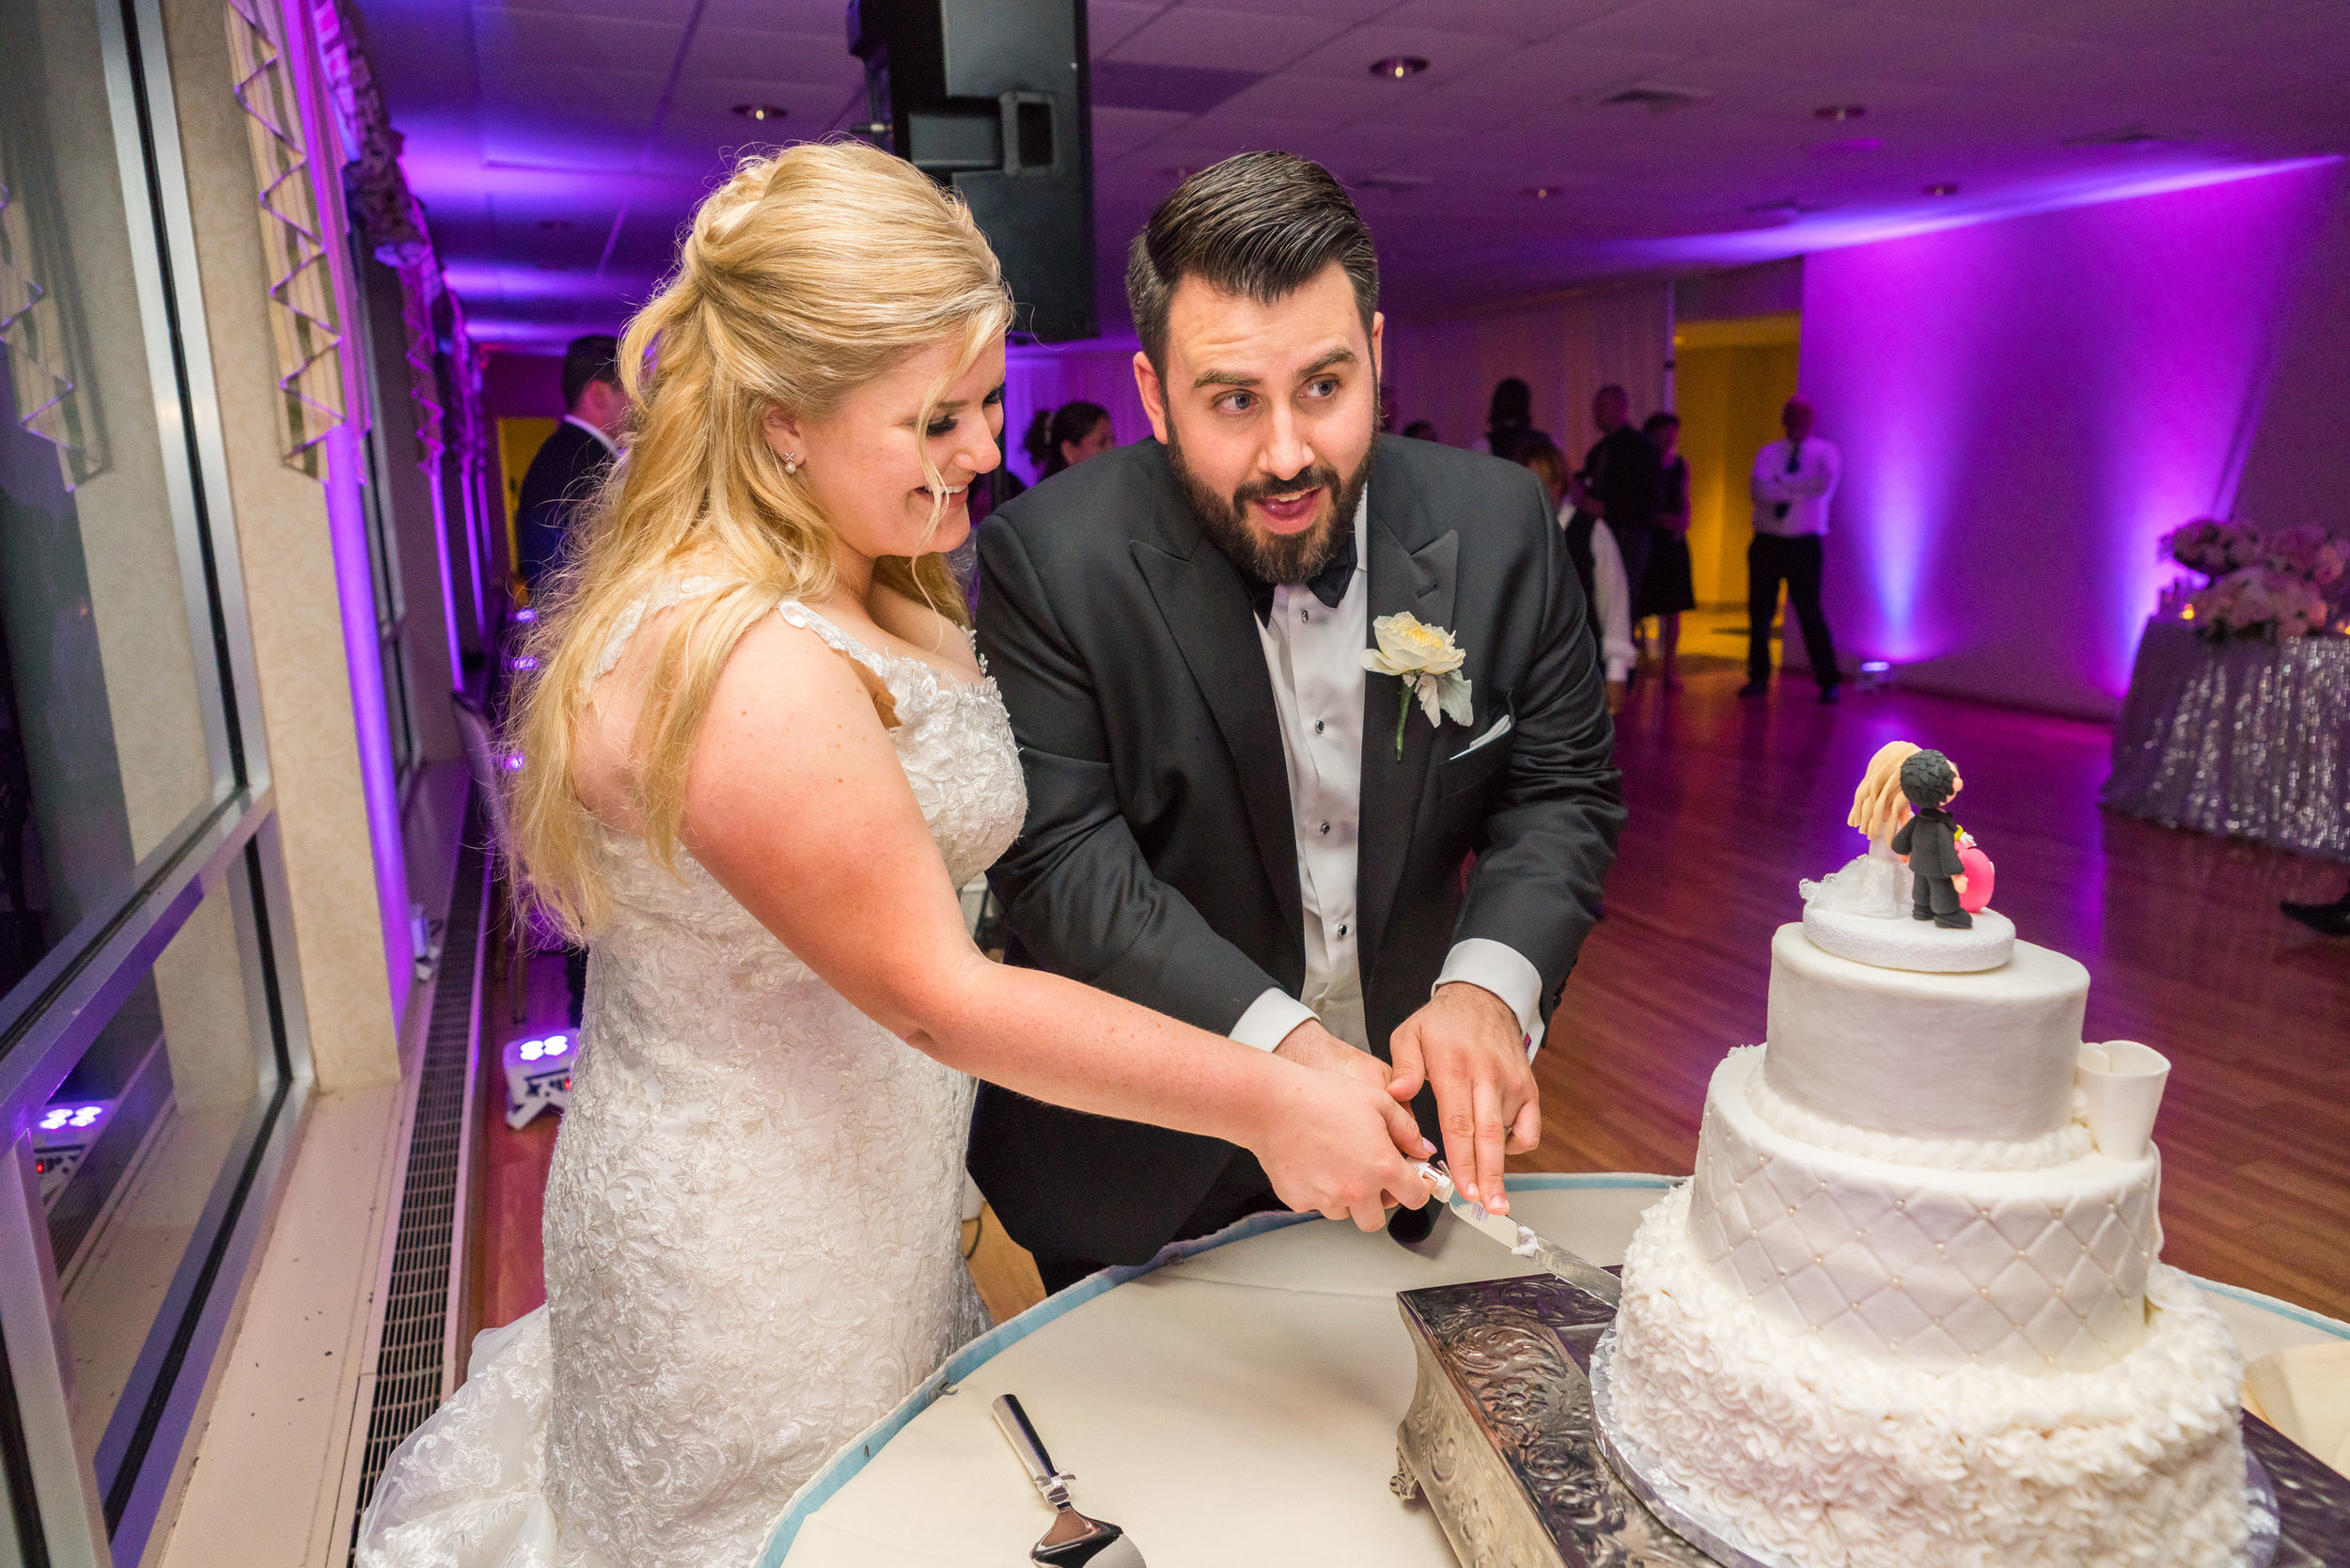 Cake cutting photos at Ft Belvoir wedding in virginia